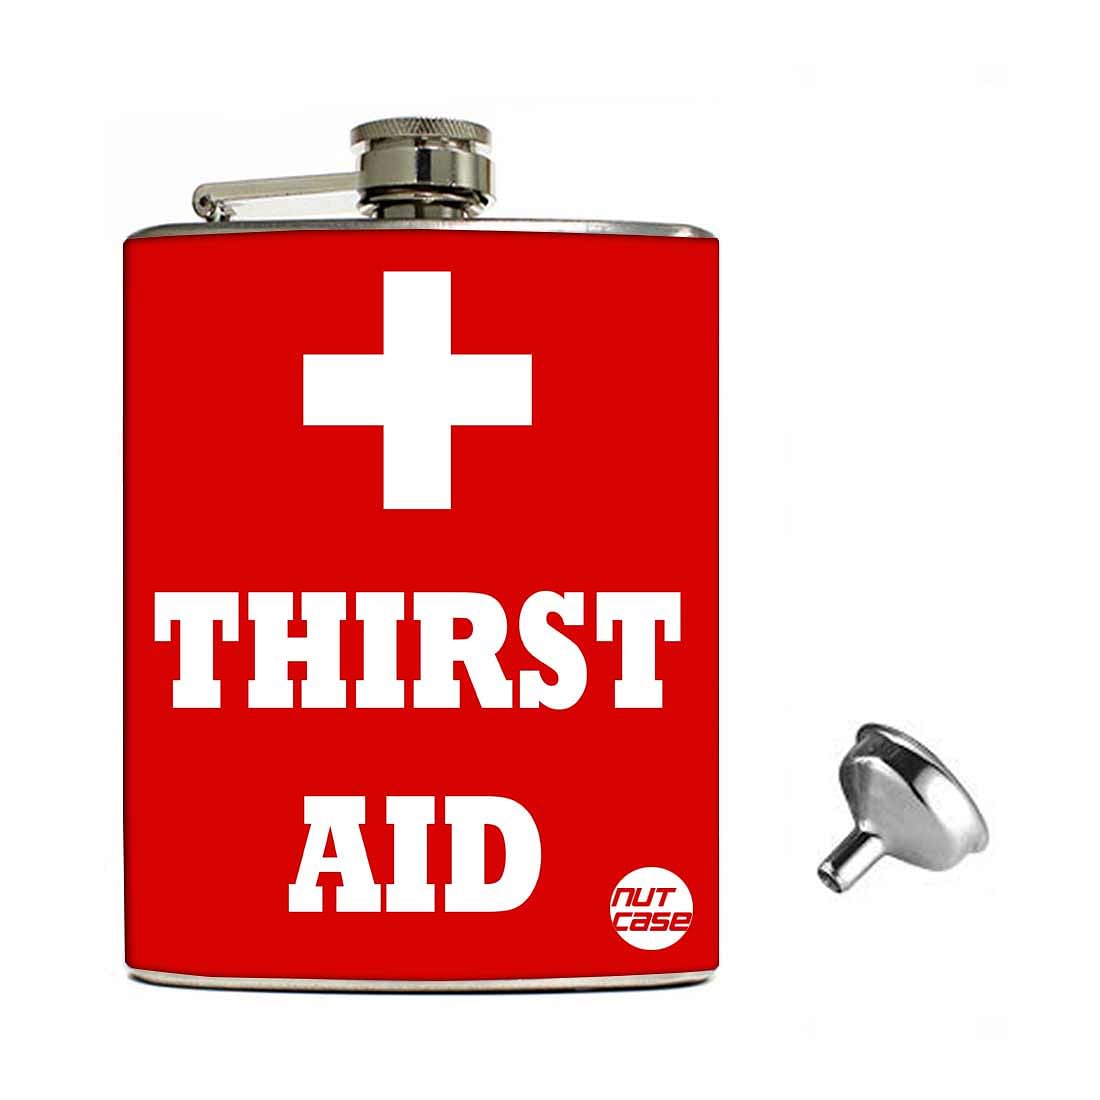 Hip Flask Gift Box -Thirst Aid Nutcase